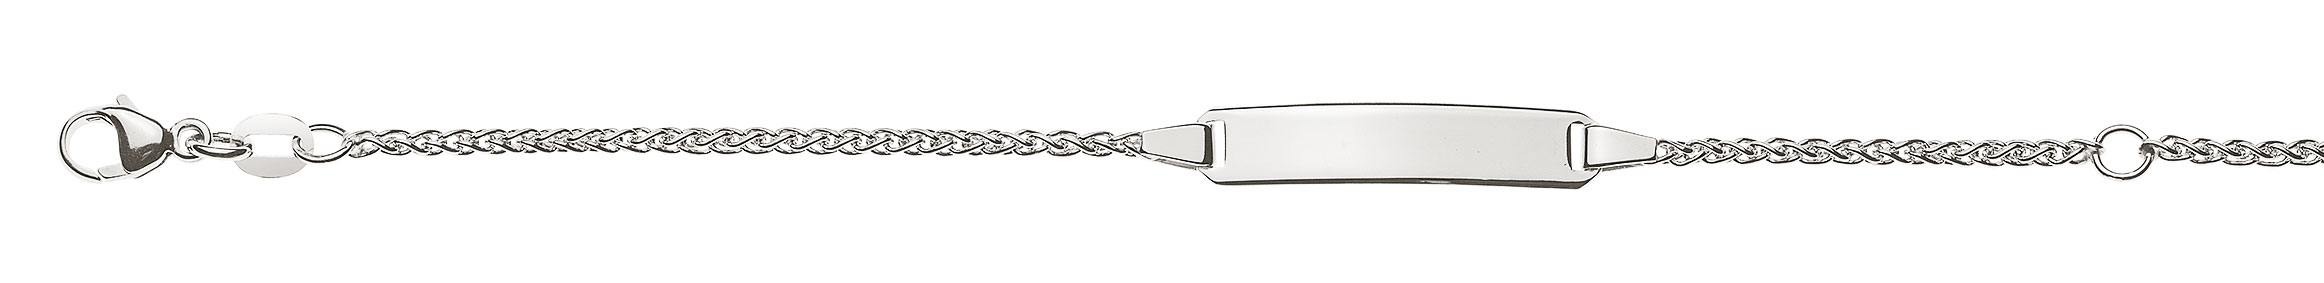 AURONOS Prestige ID-Bracelet 18k Weissgold Zopfkette 18cm